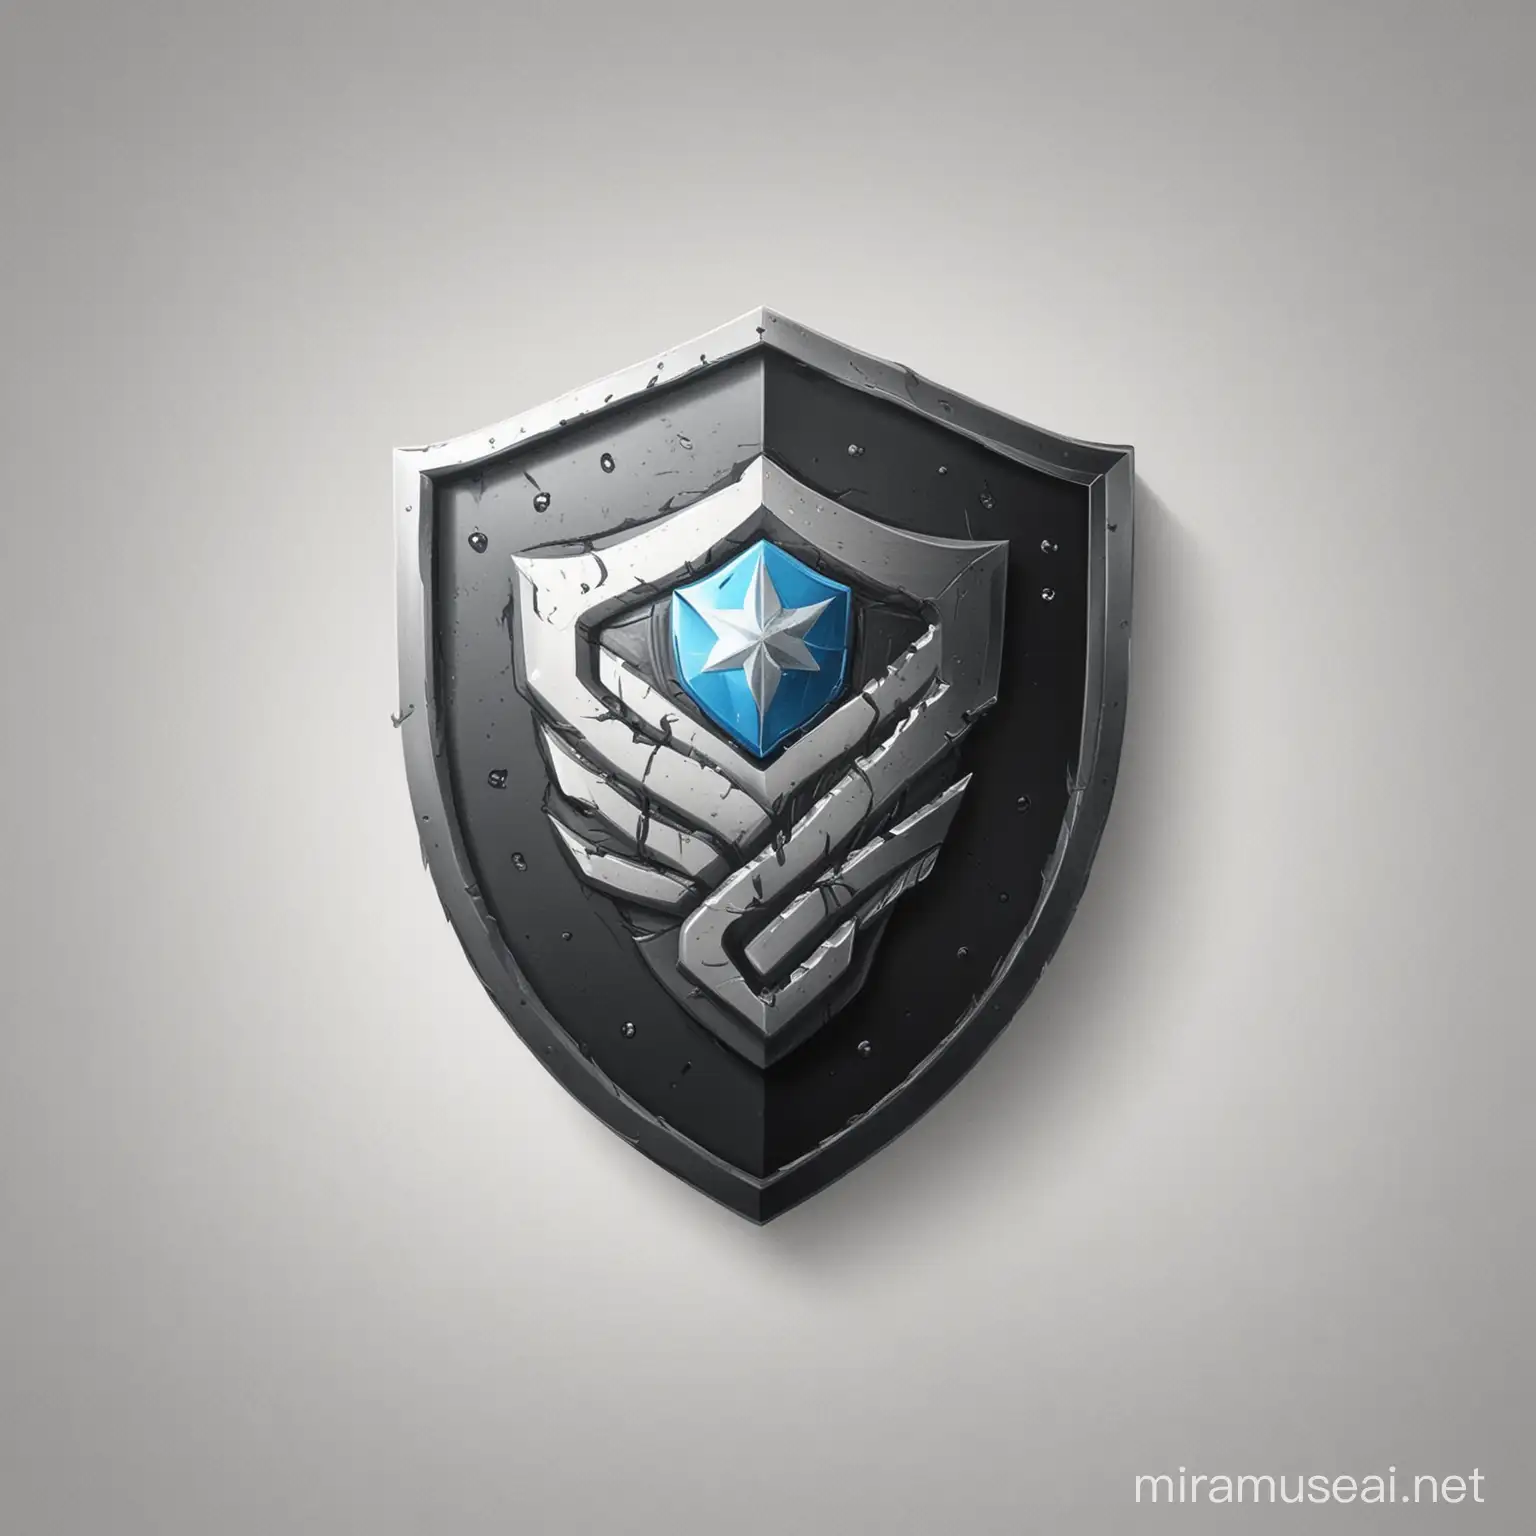 create a beautiful shield logo